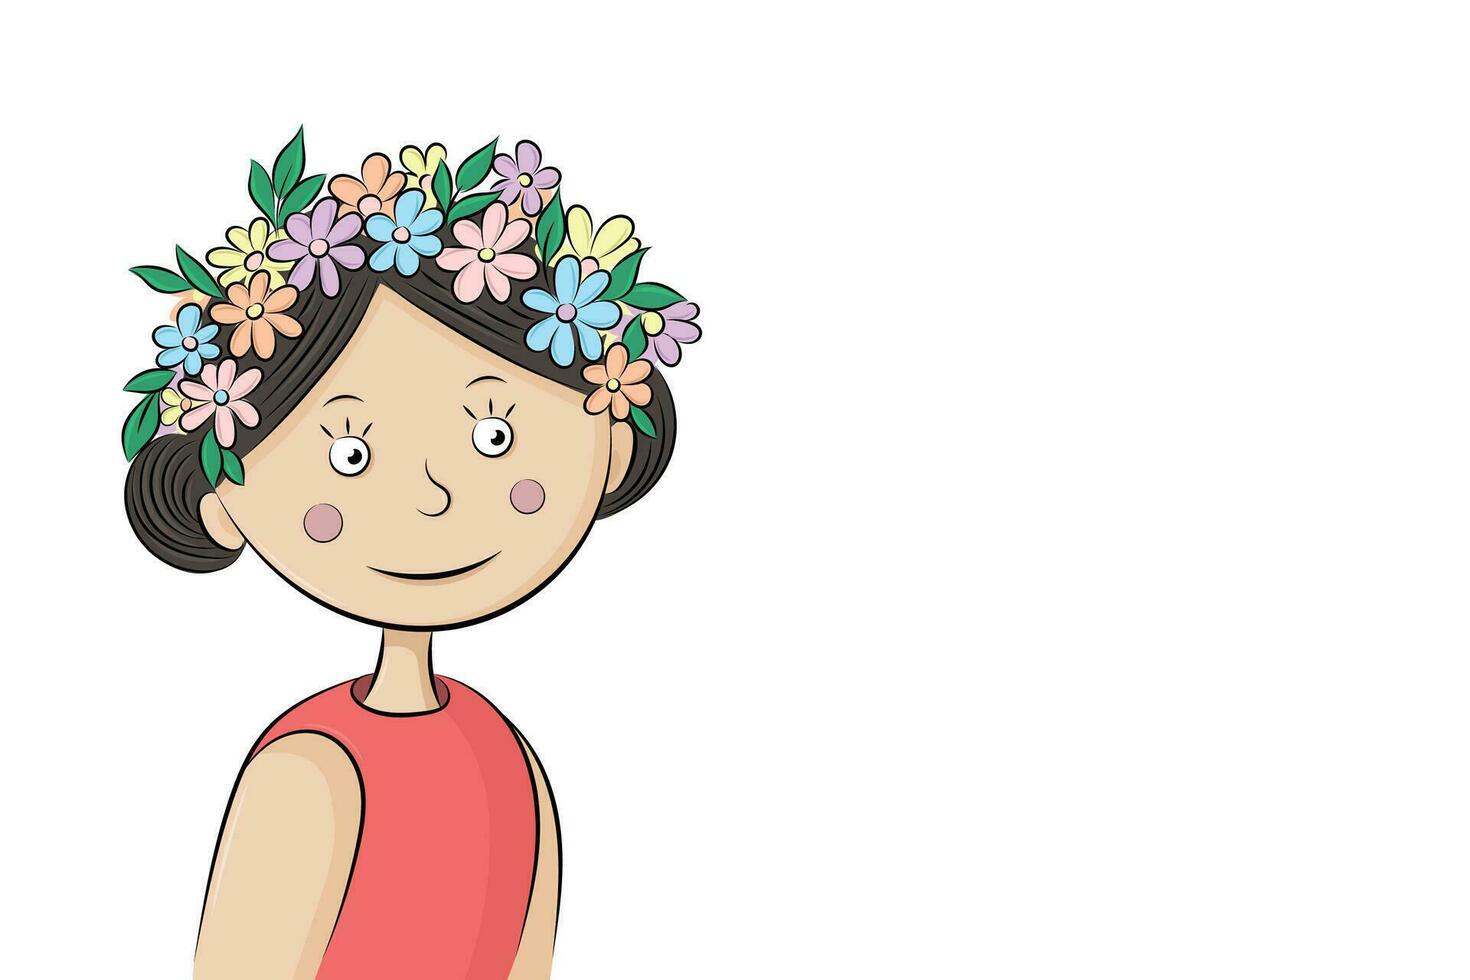 retrato de un dibujos animados linda niña en un guirnalda de flores, aislar en blanco, plano vector